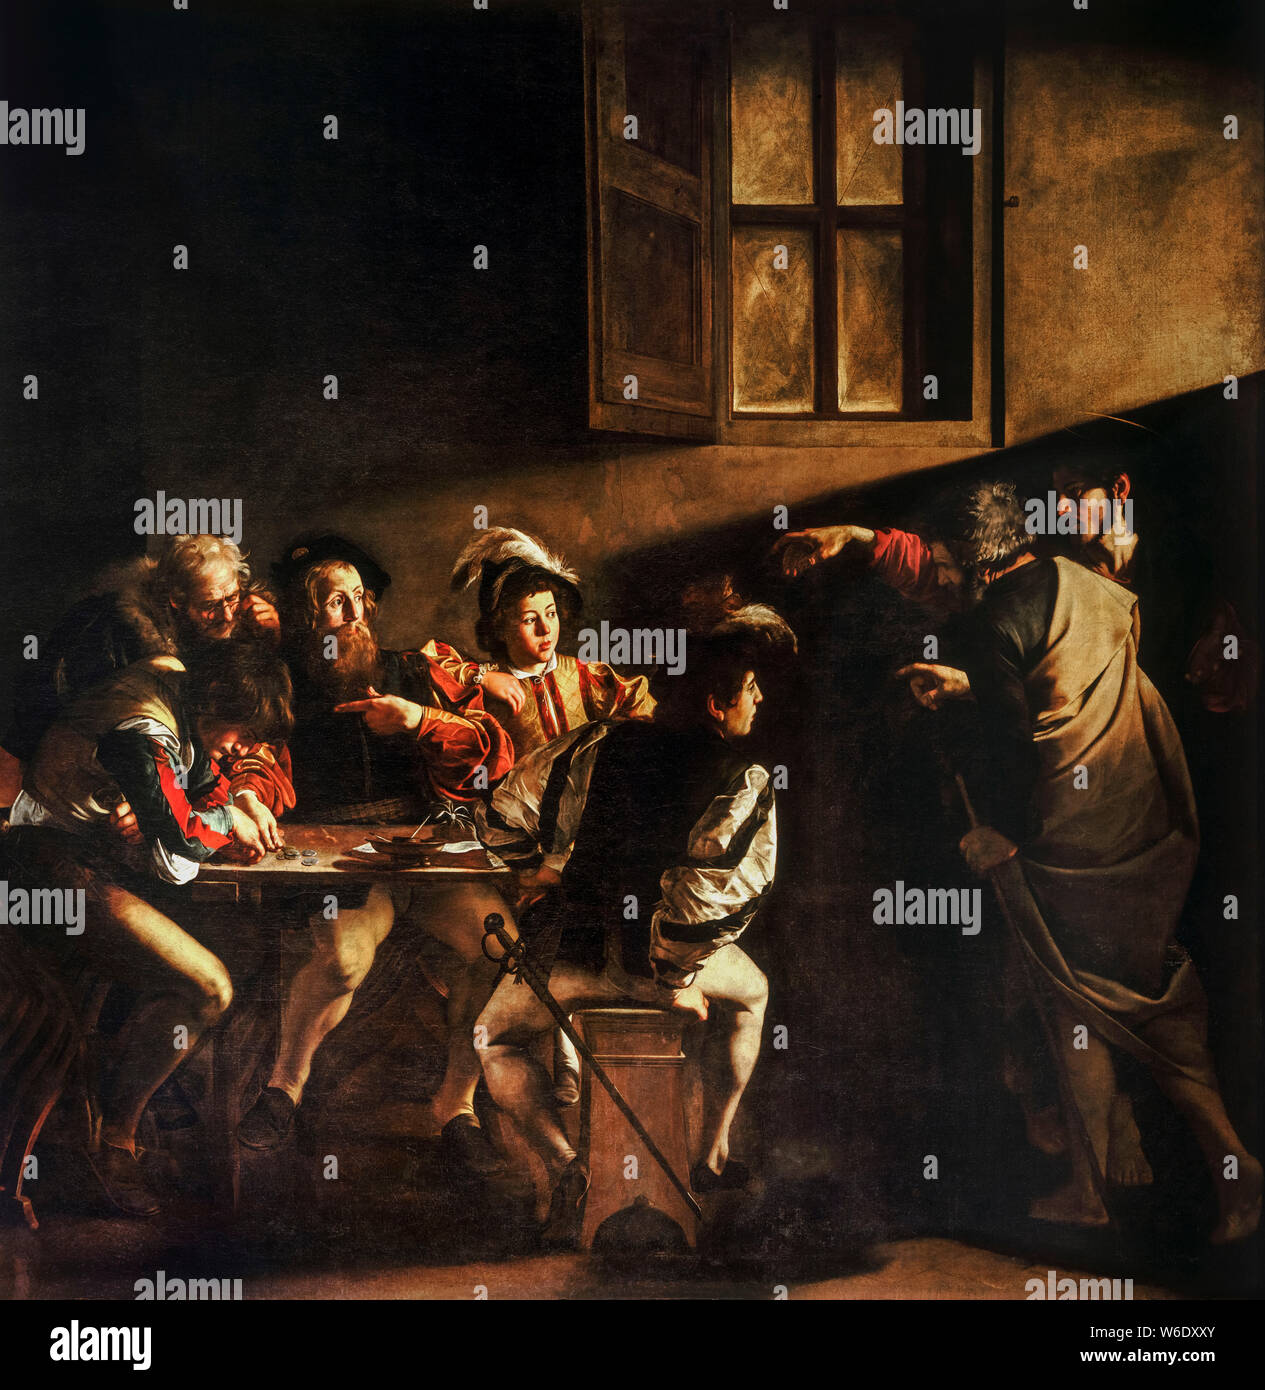 Caravaggio, The Calling of Saint Matthew, painting, 1599-1600 Stock Photo